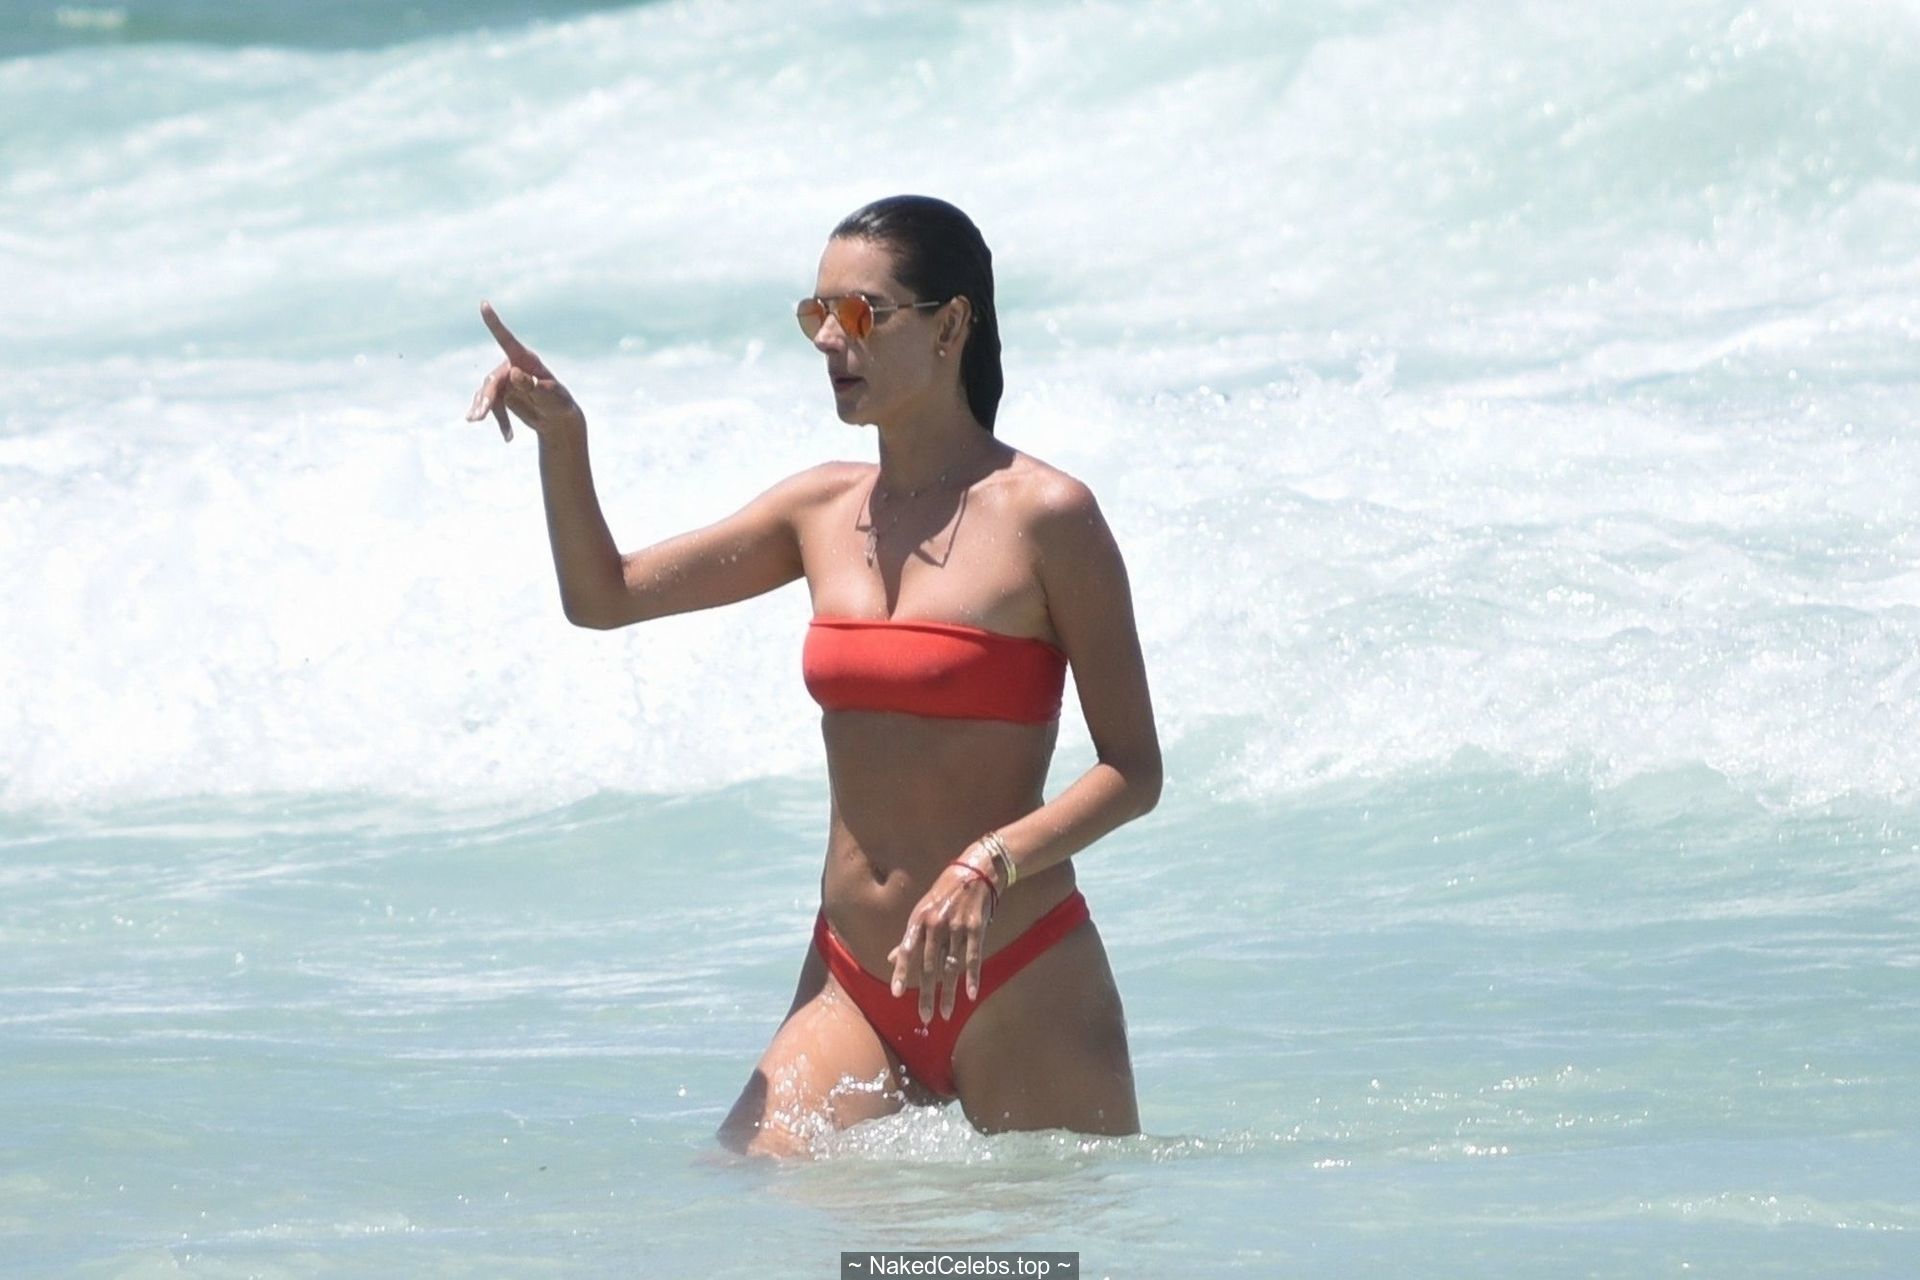 alessandra-ambrosio-in-red-bikini-on-a-beach-in-brazil-3.jpg